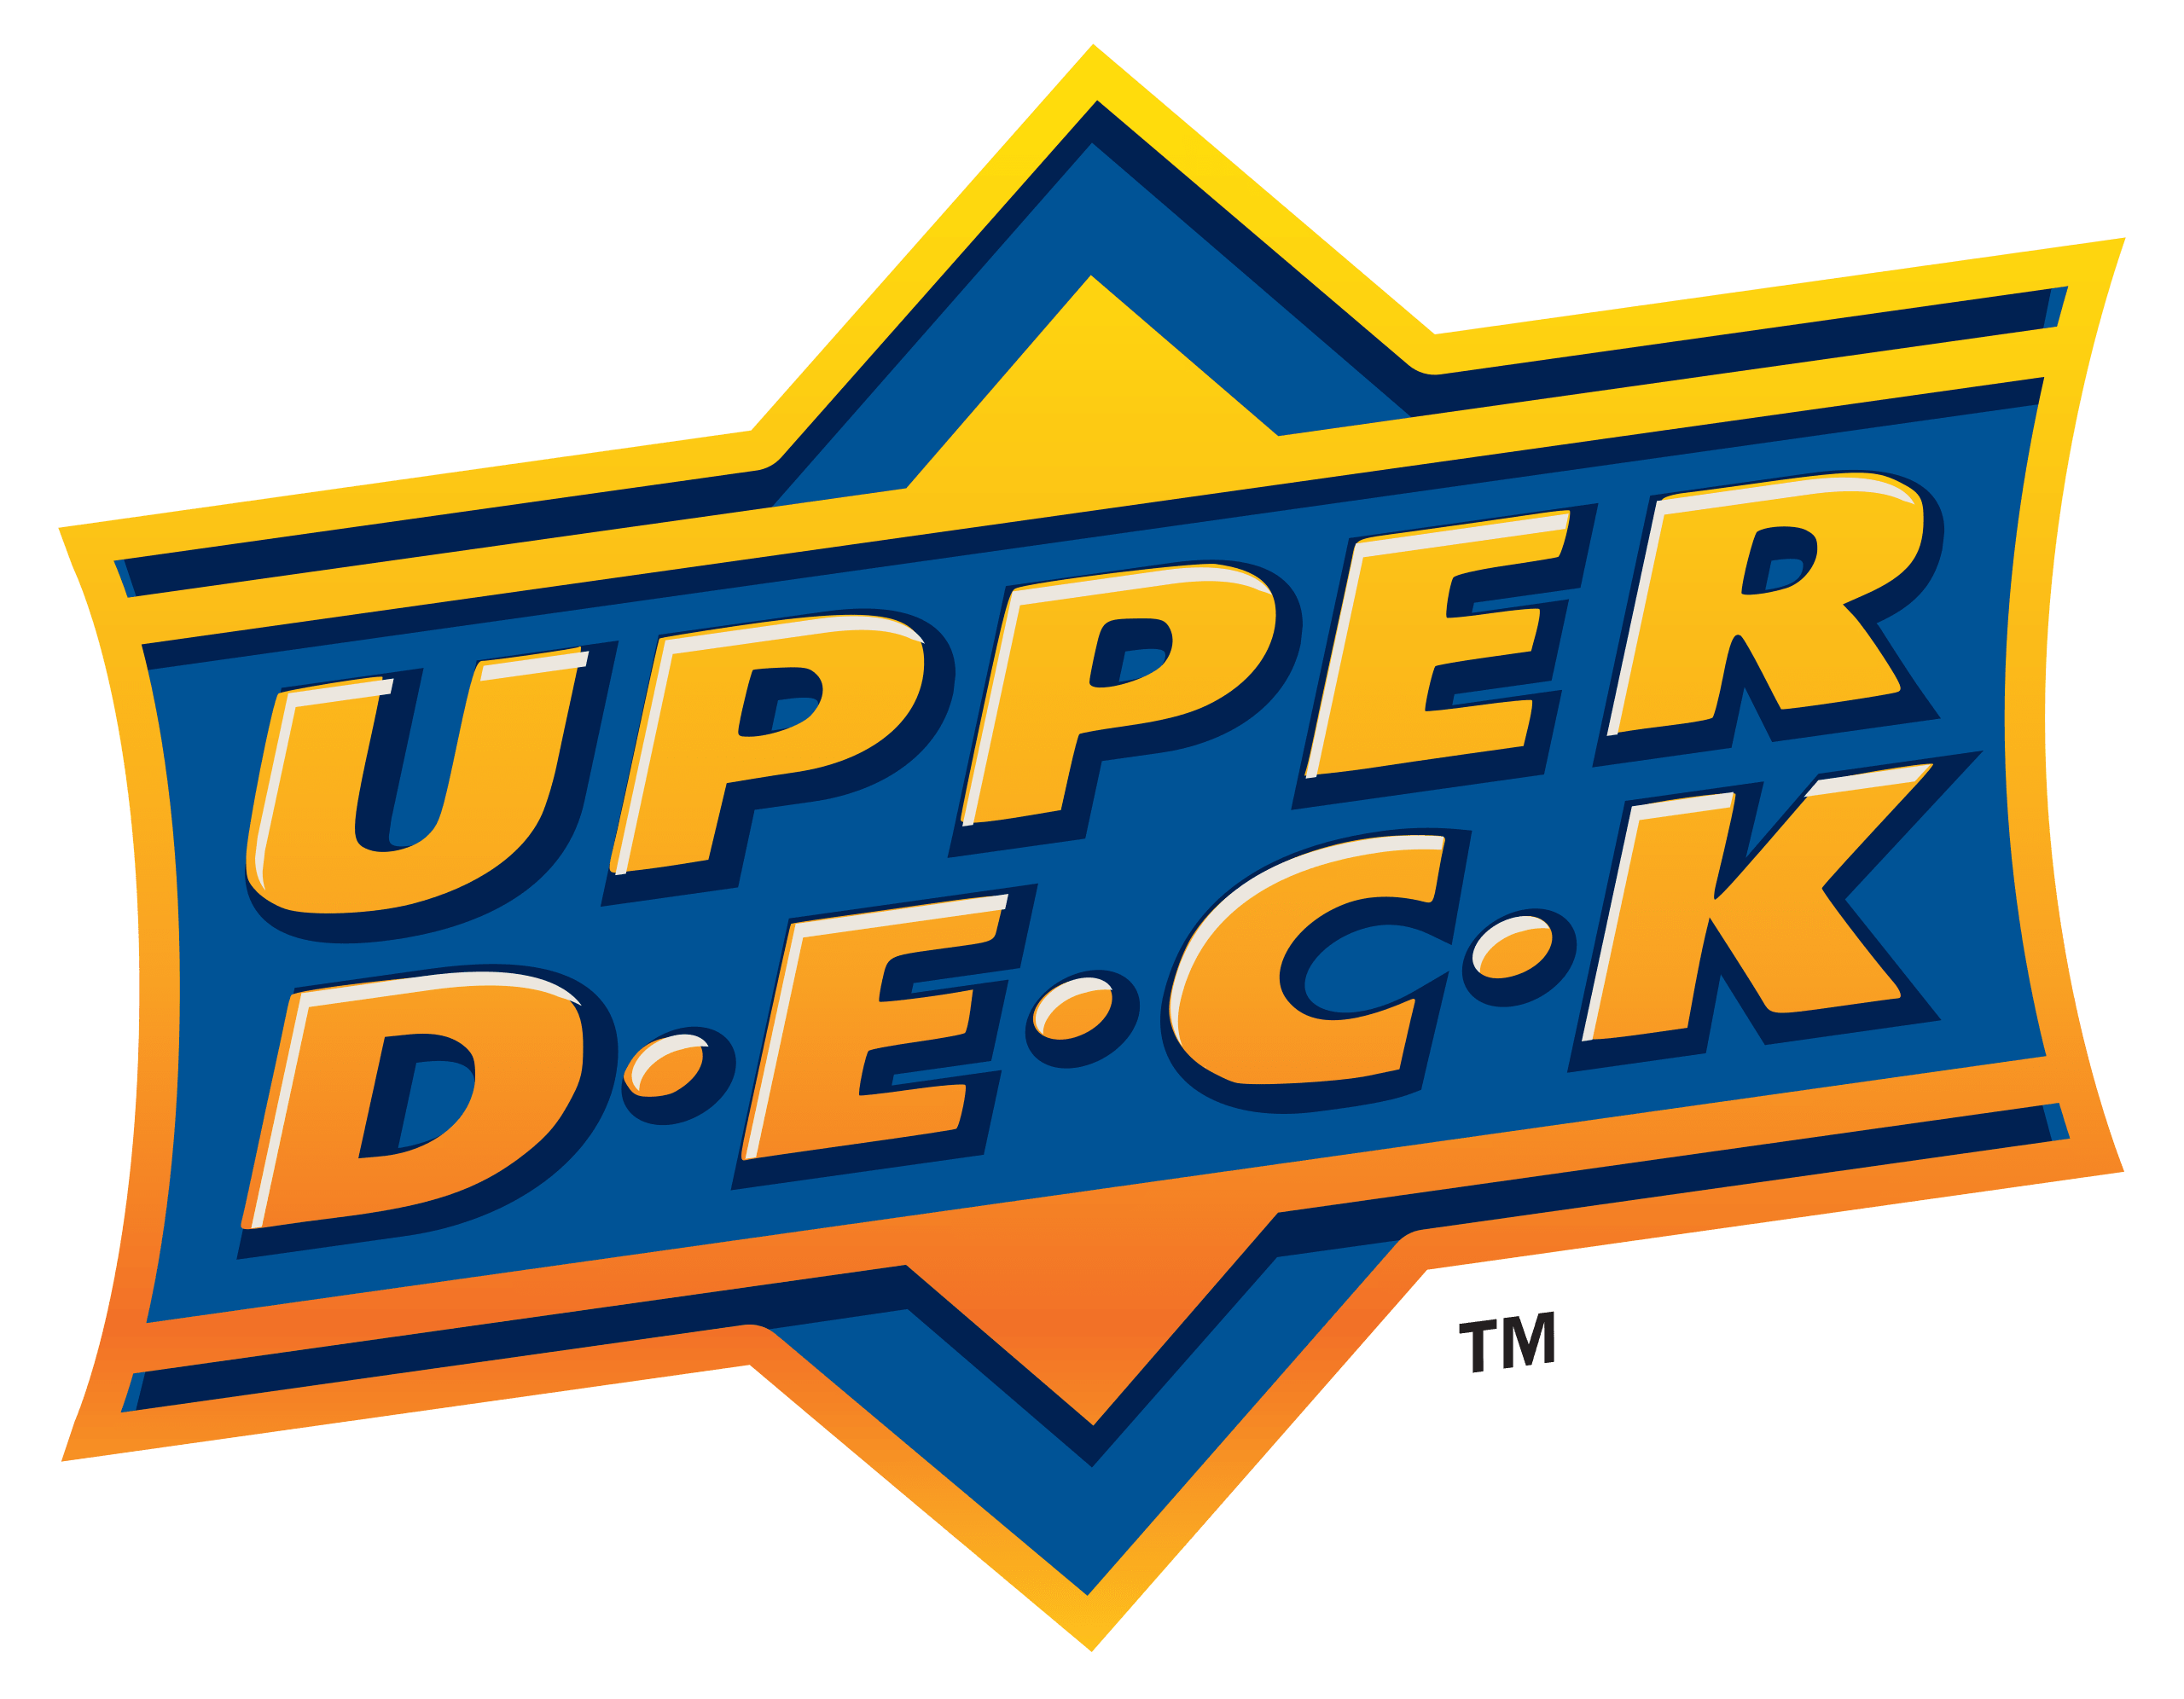 Hockey - 2023/24- Upper Deck Series 1 - Hobby Pack (12 Cards) - Hobby Champion Inc